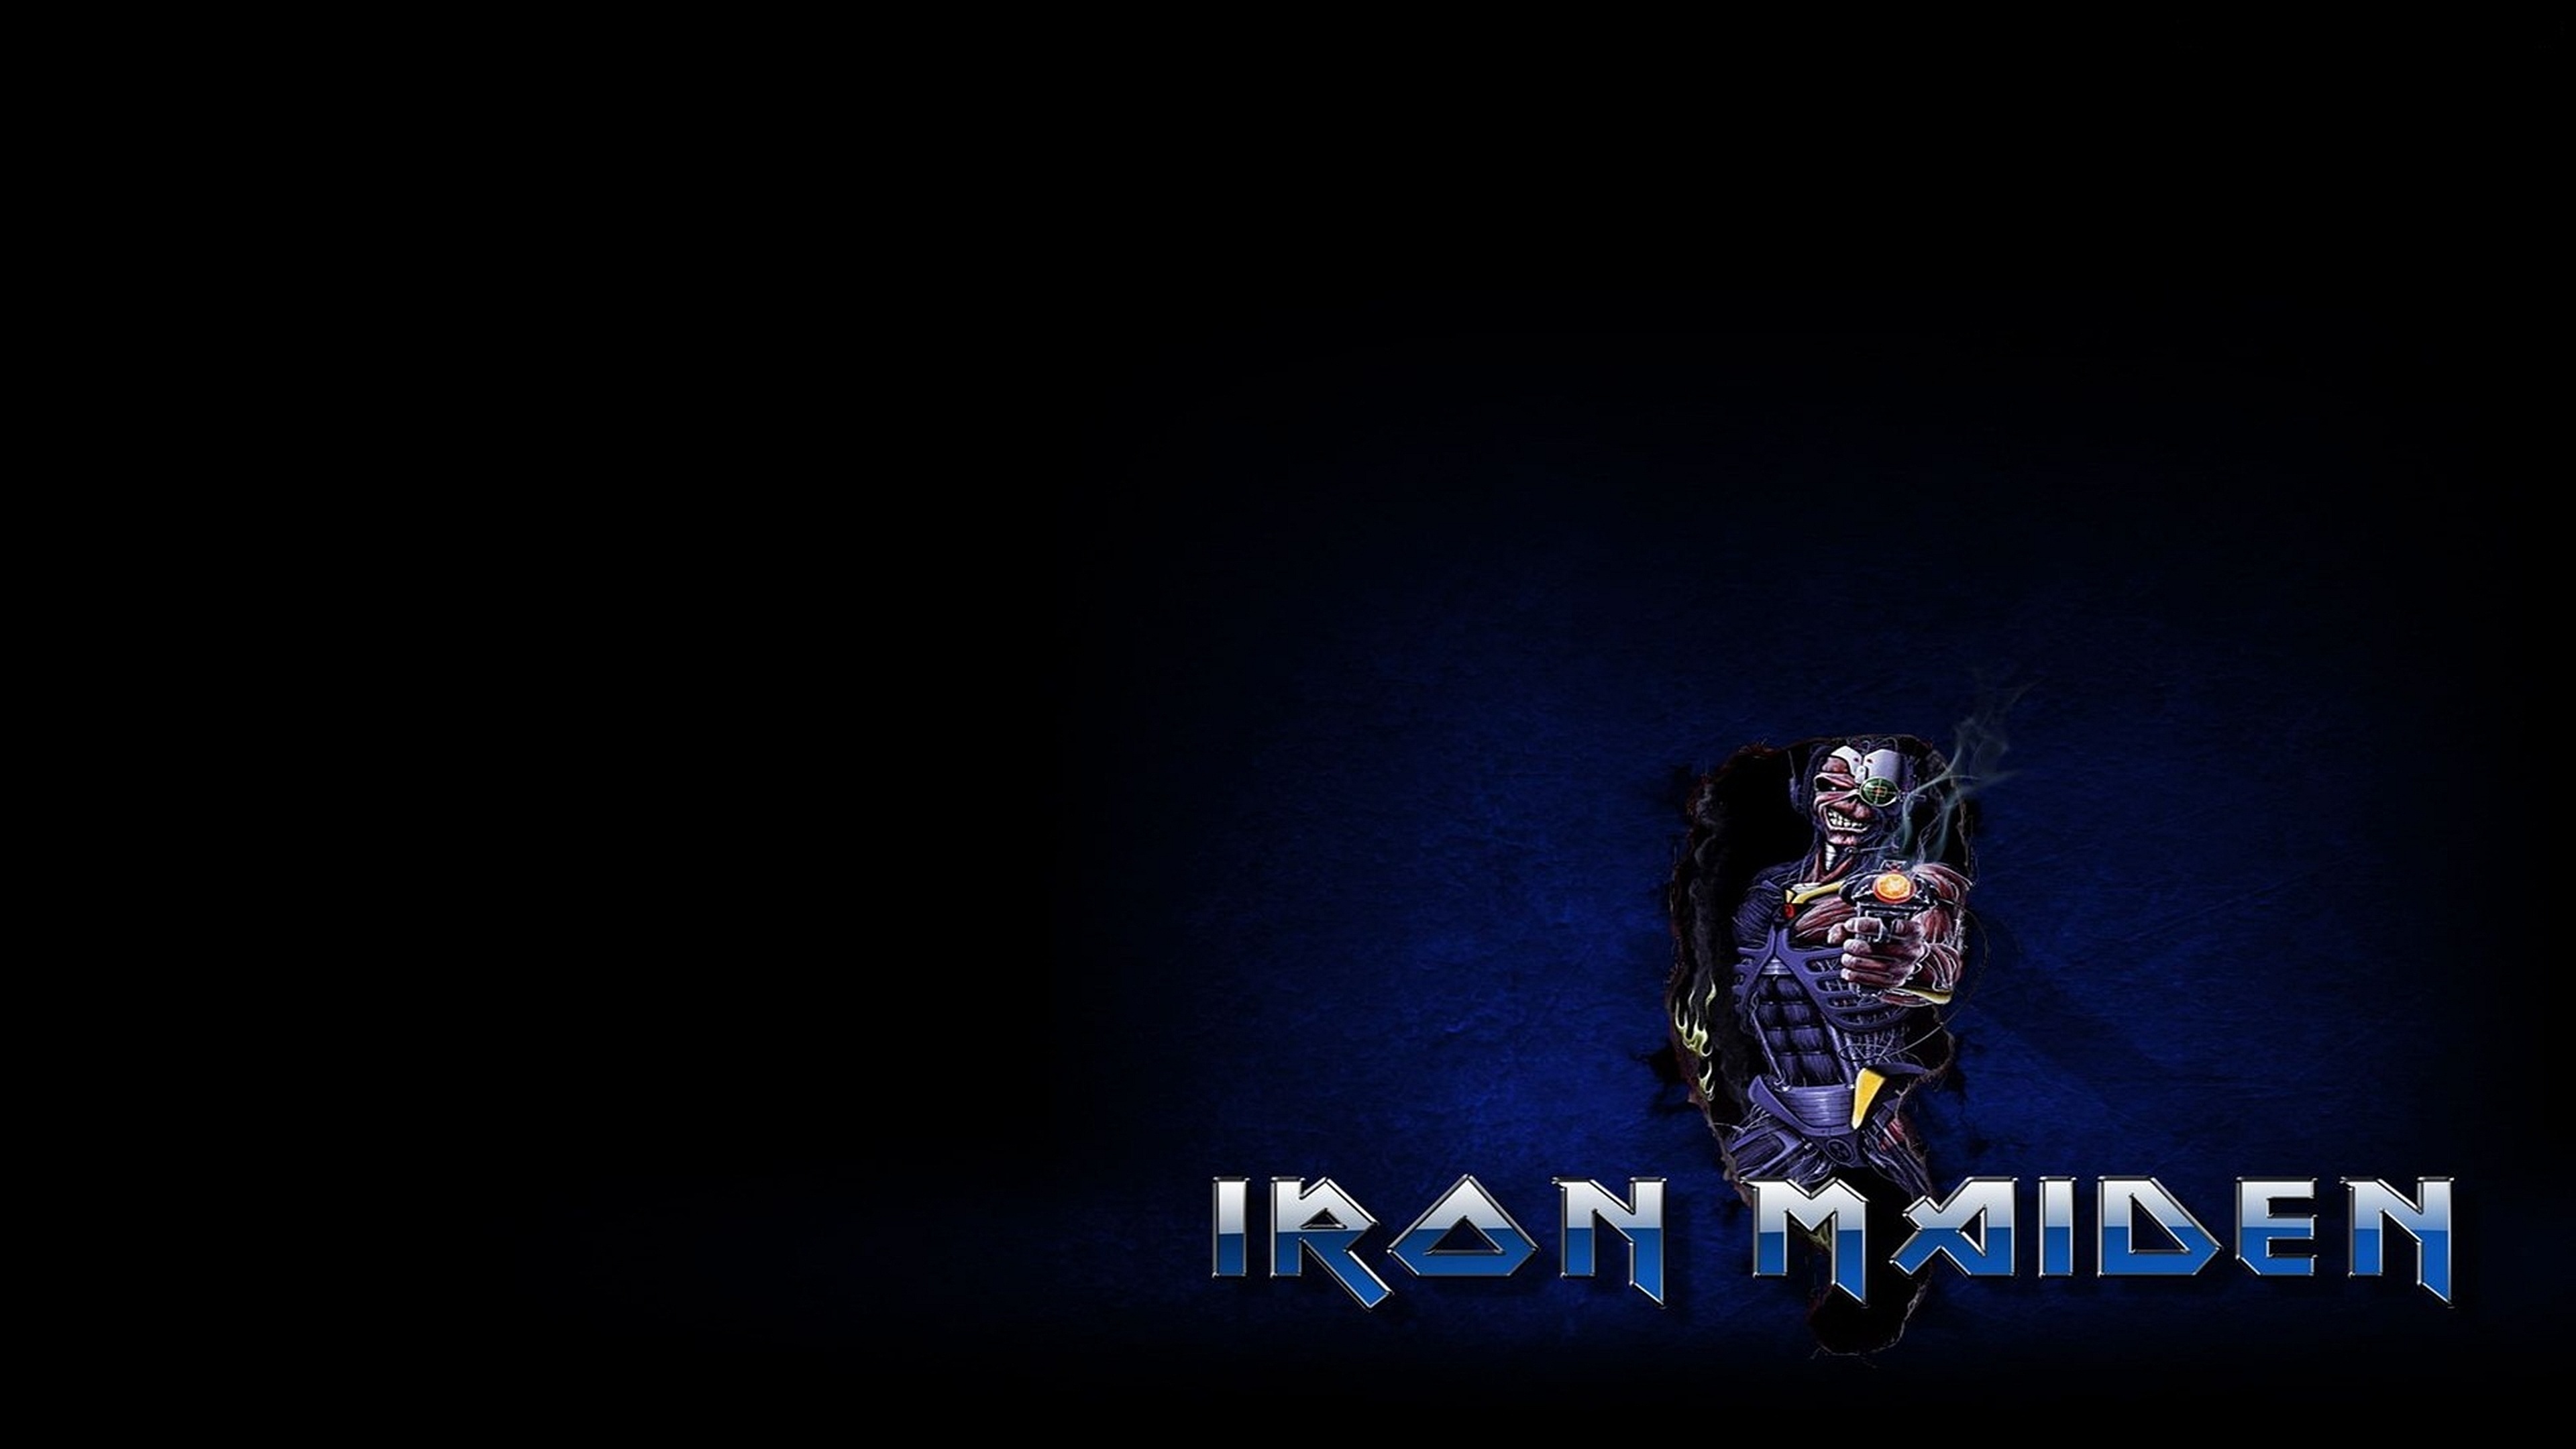 Iron Maiden Band Music, 4K Ultra HD wallpaper, Immersive visuals, Concert atmosphere, 3840x2160 4K Desktop